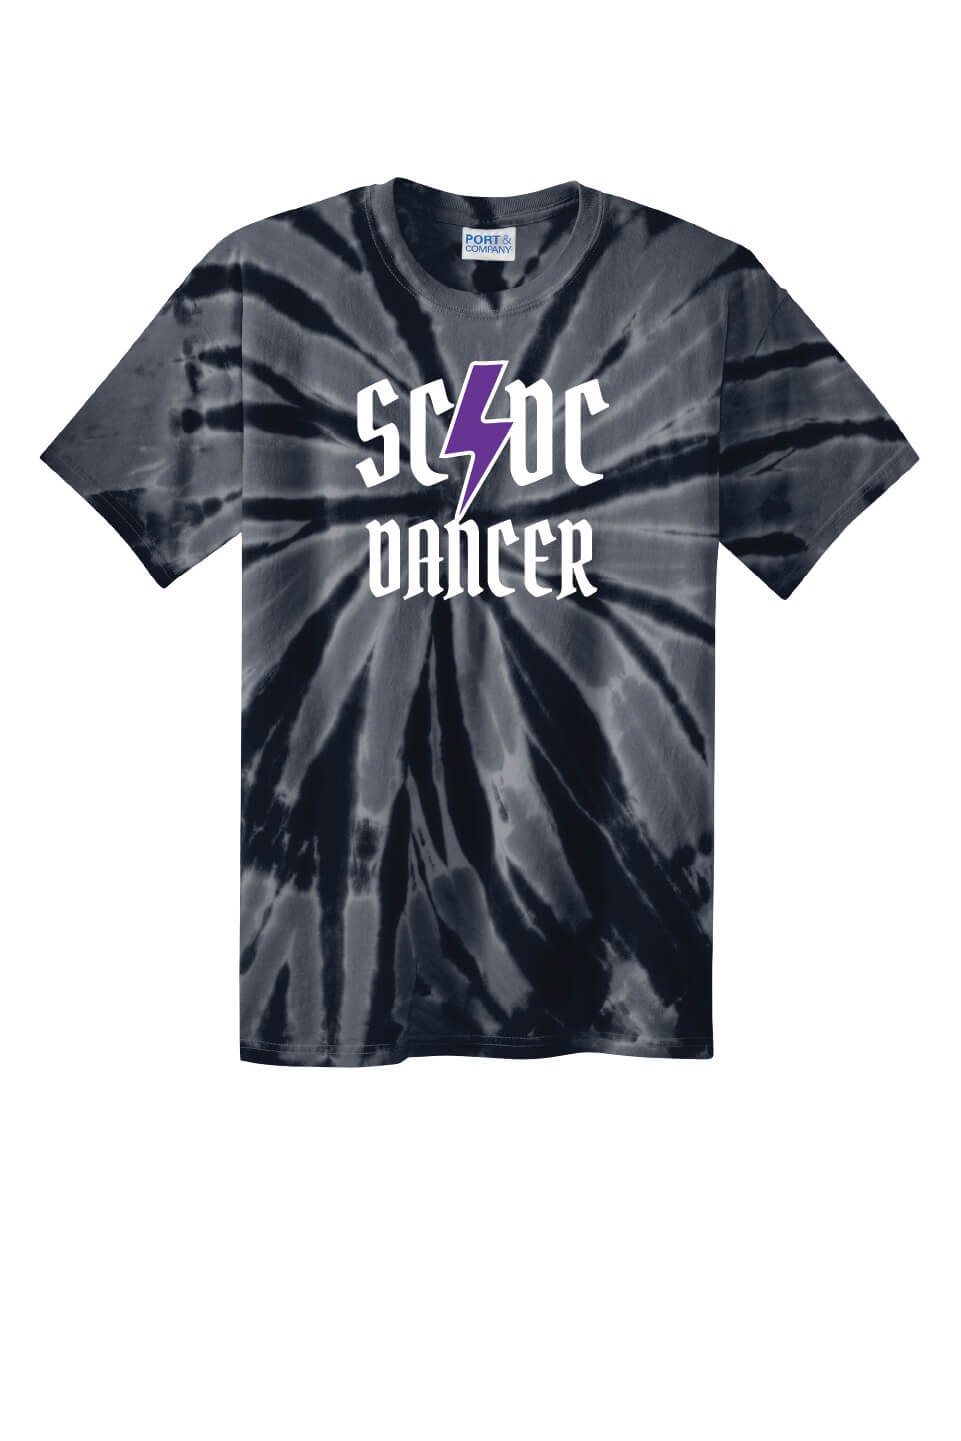 SCDC Dancer Tie Dye Short Sleeve T-Shirt black